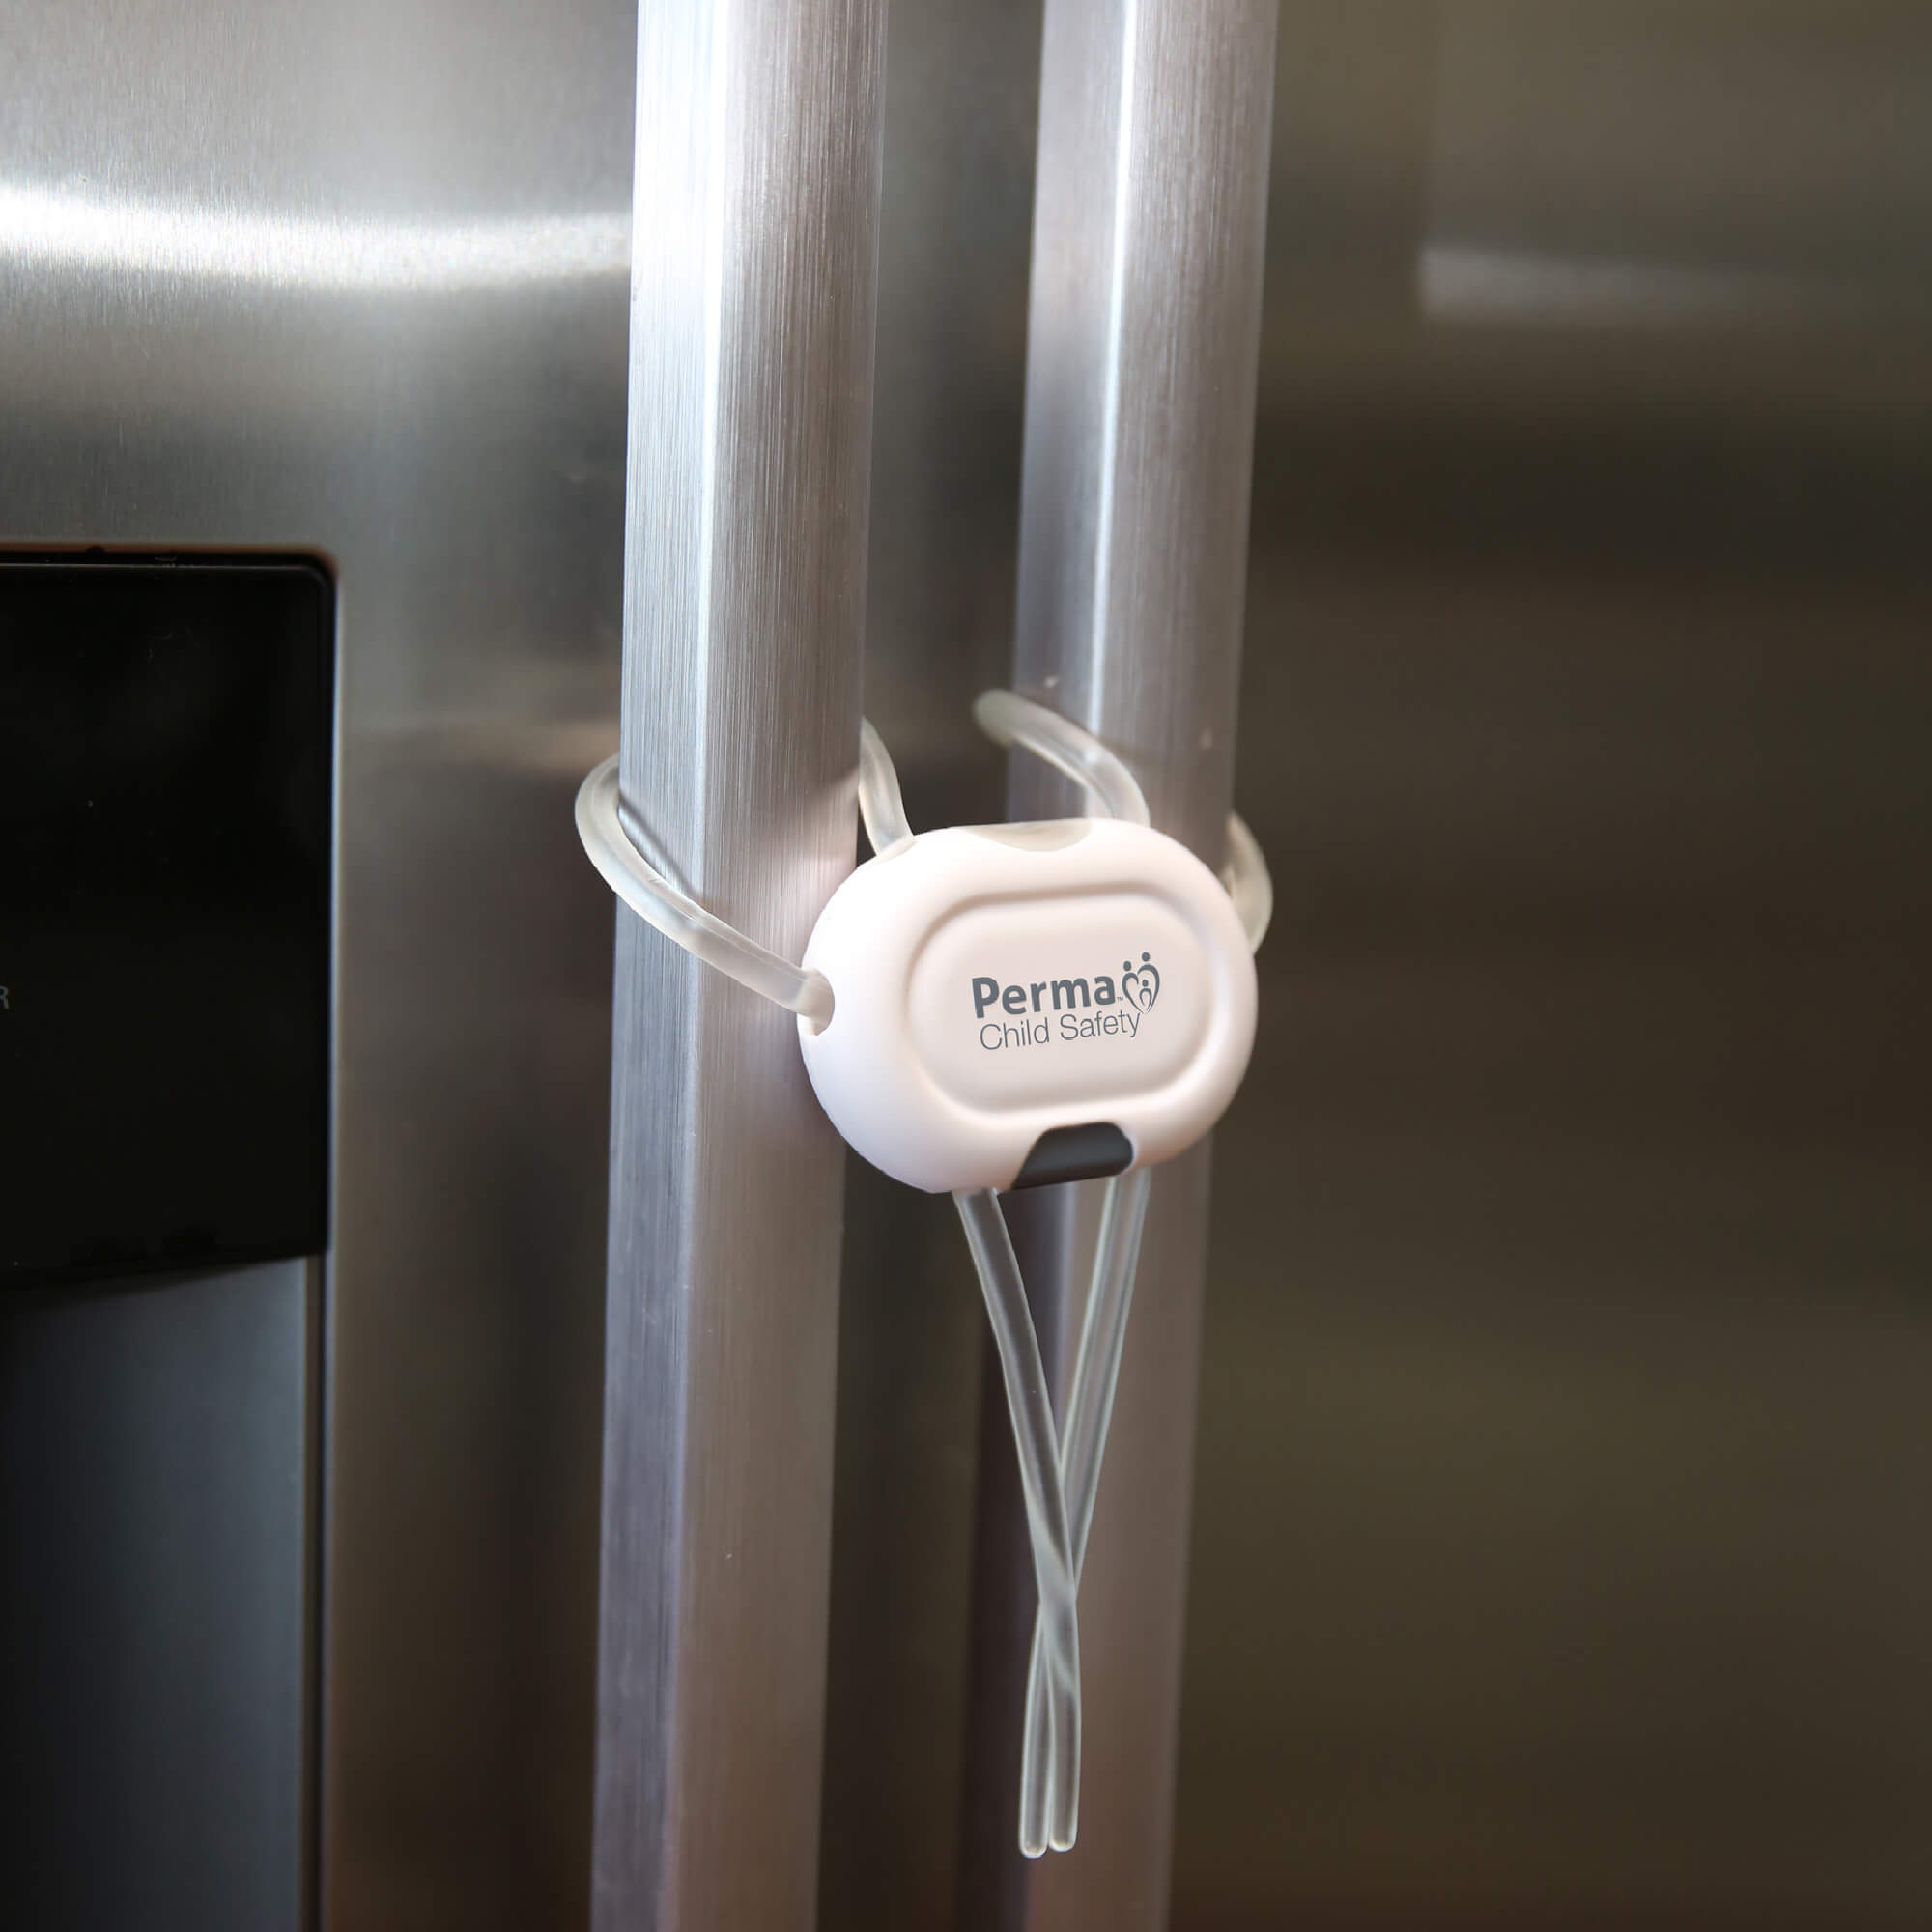 10 Pack Cabinet Locks – U Shaped Safety Child Locks – Adjustable